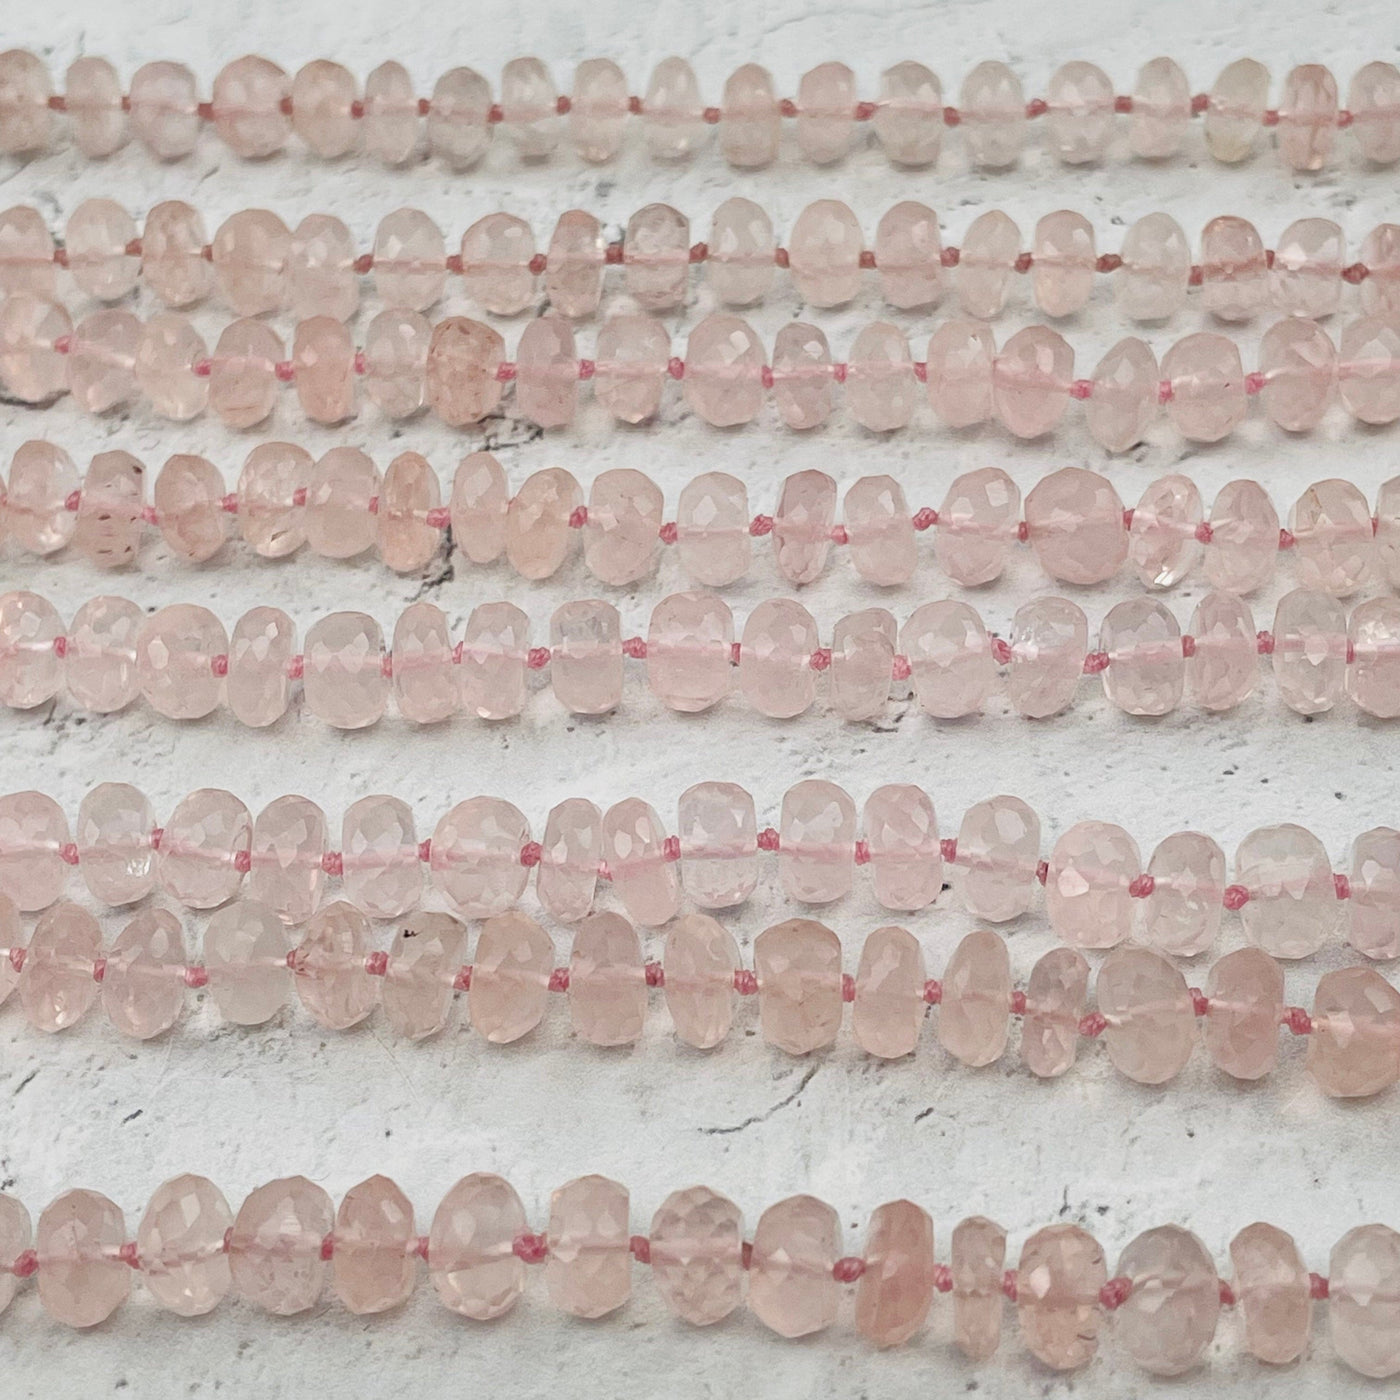 close up of the faceted rose quartz beads 